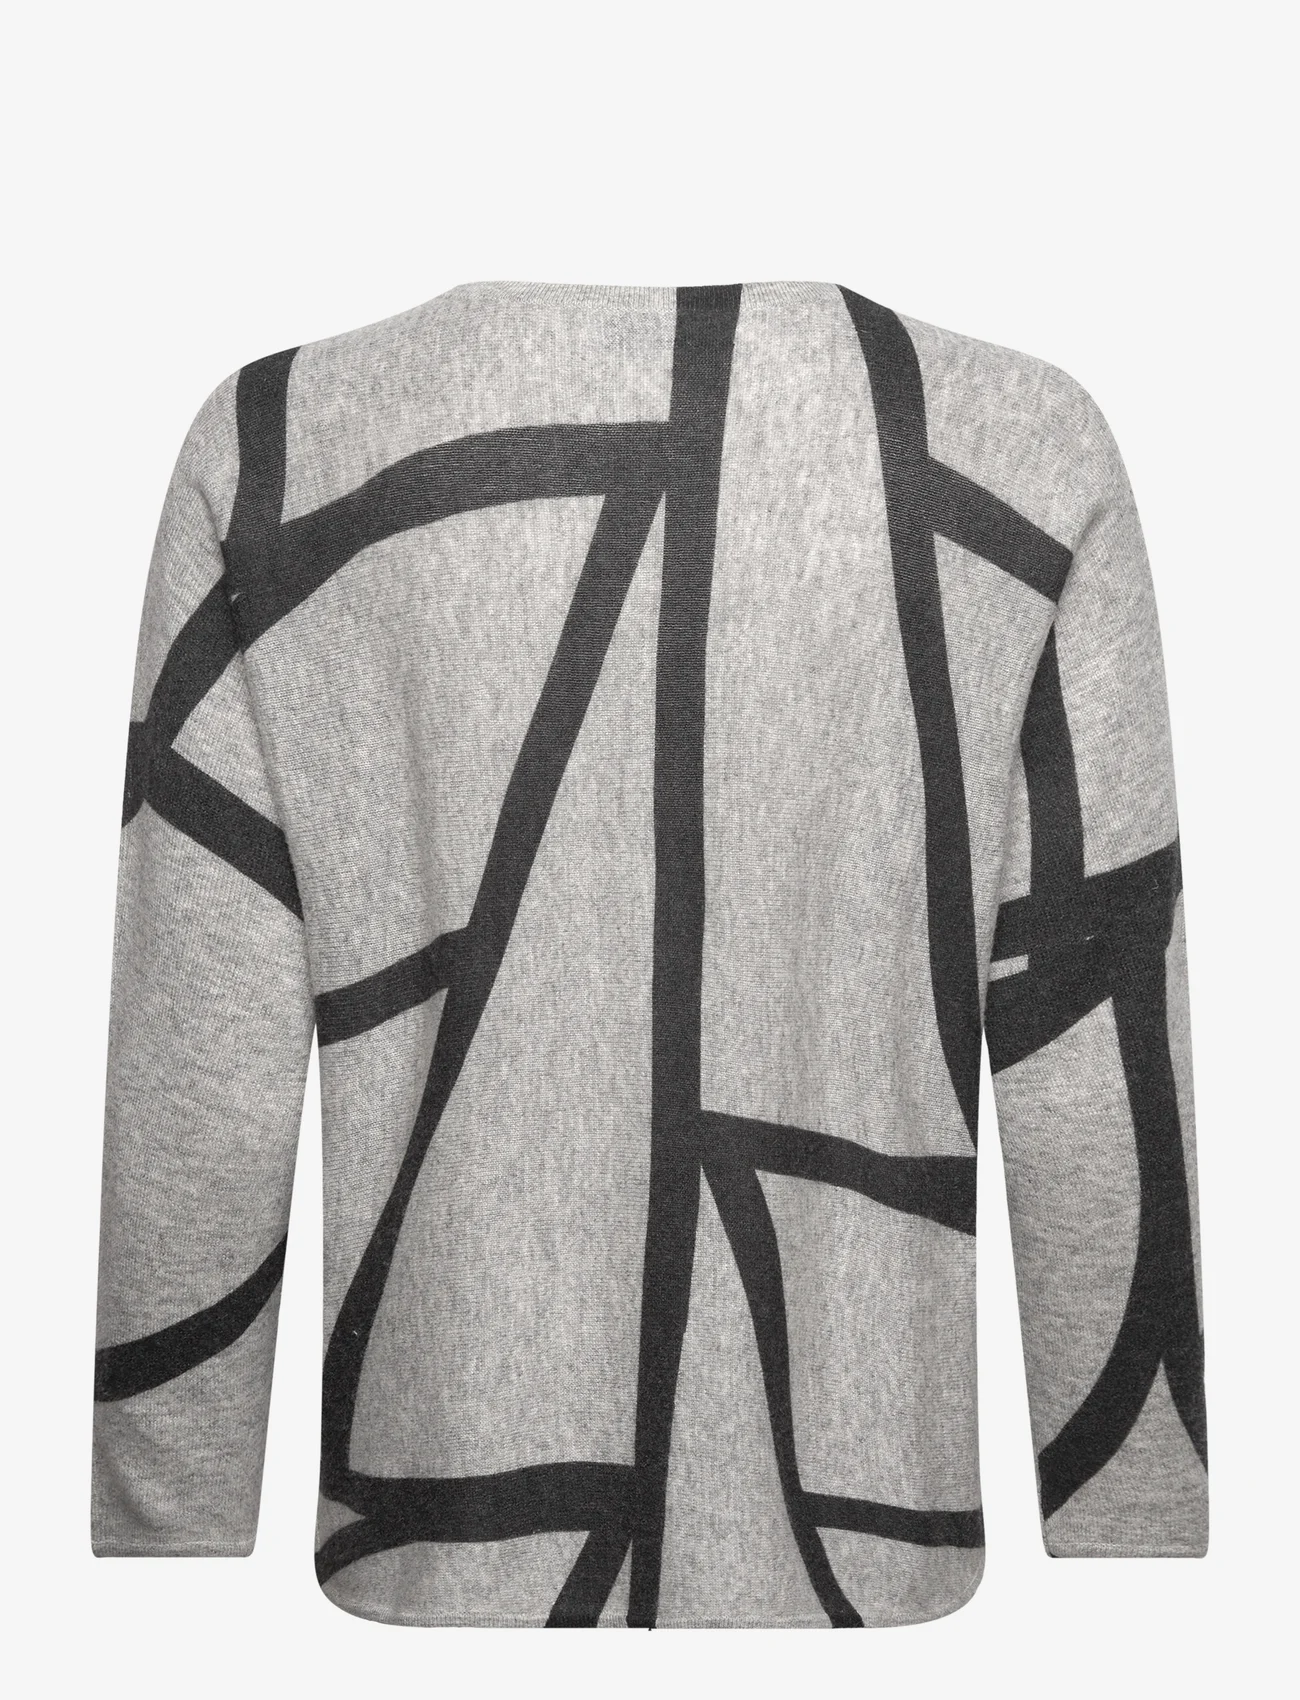 Davida Cashmere - Curved Logo - pullover - light grey / black - 1